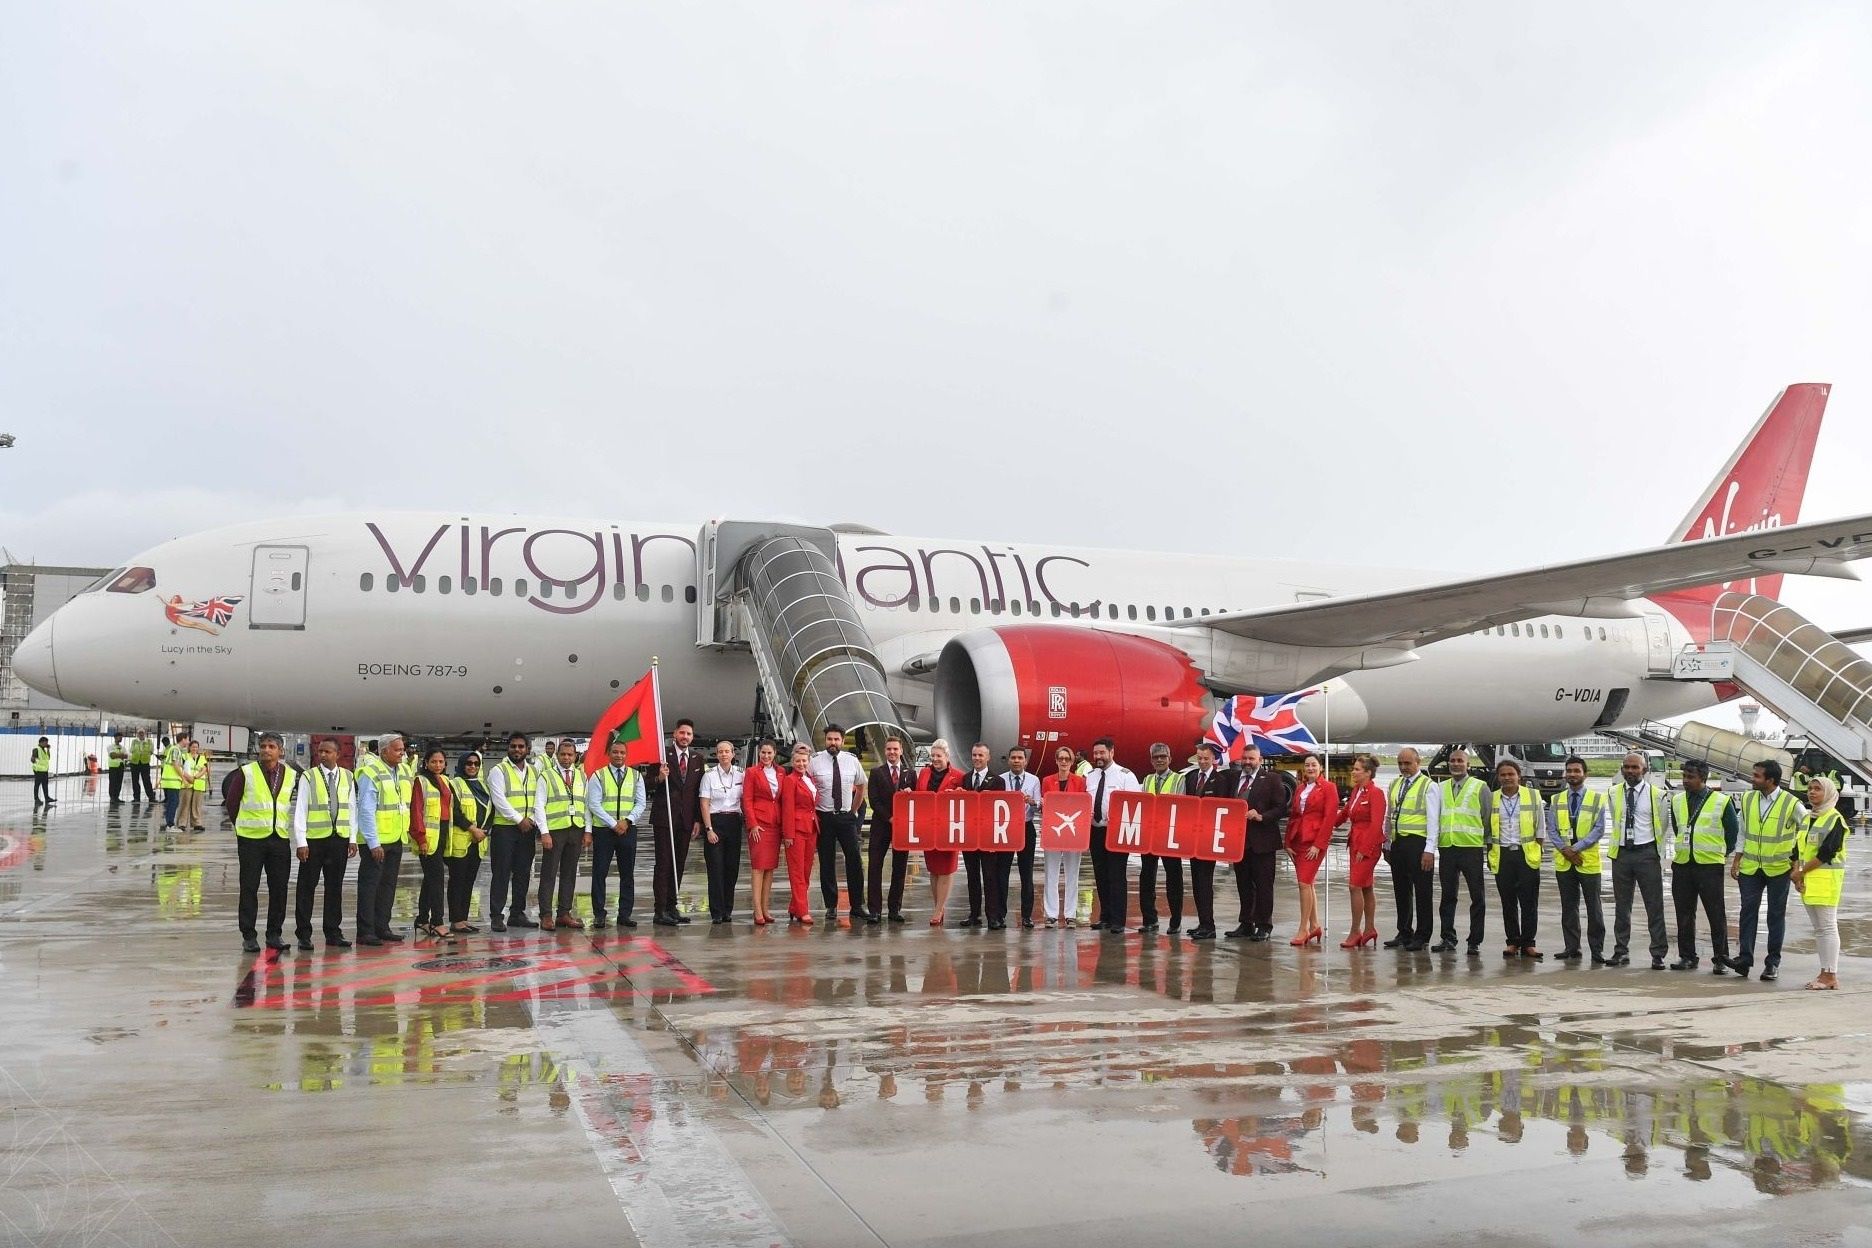 Virgin Atlantic Male launch 3.2